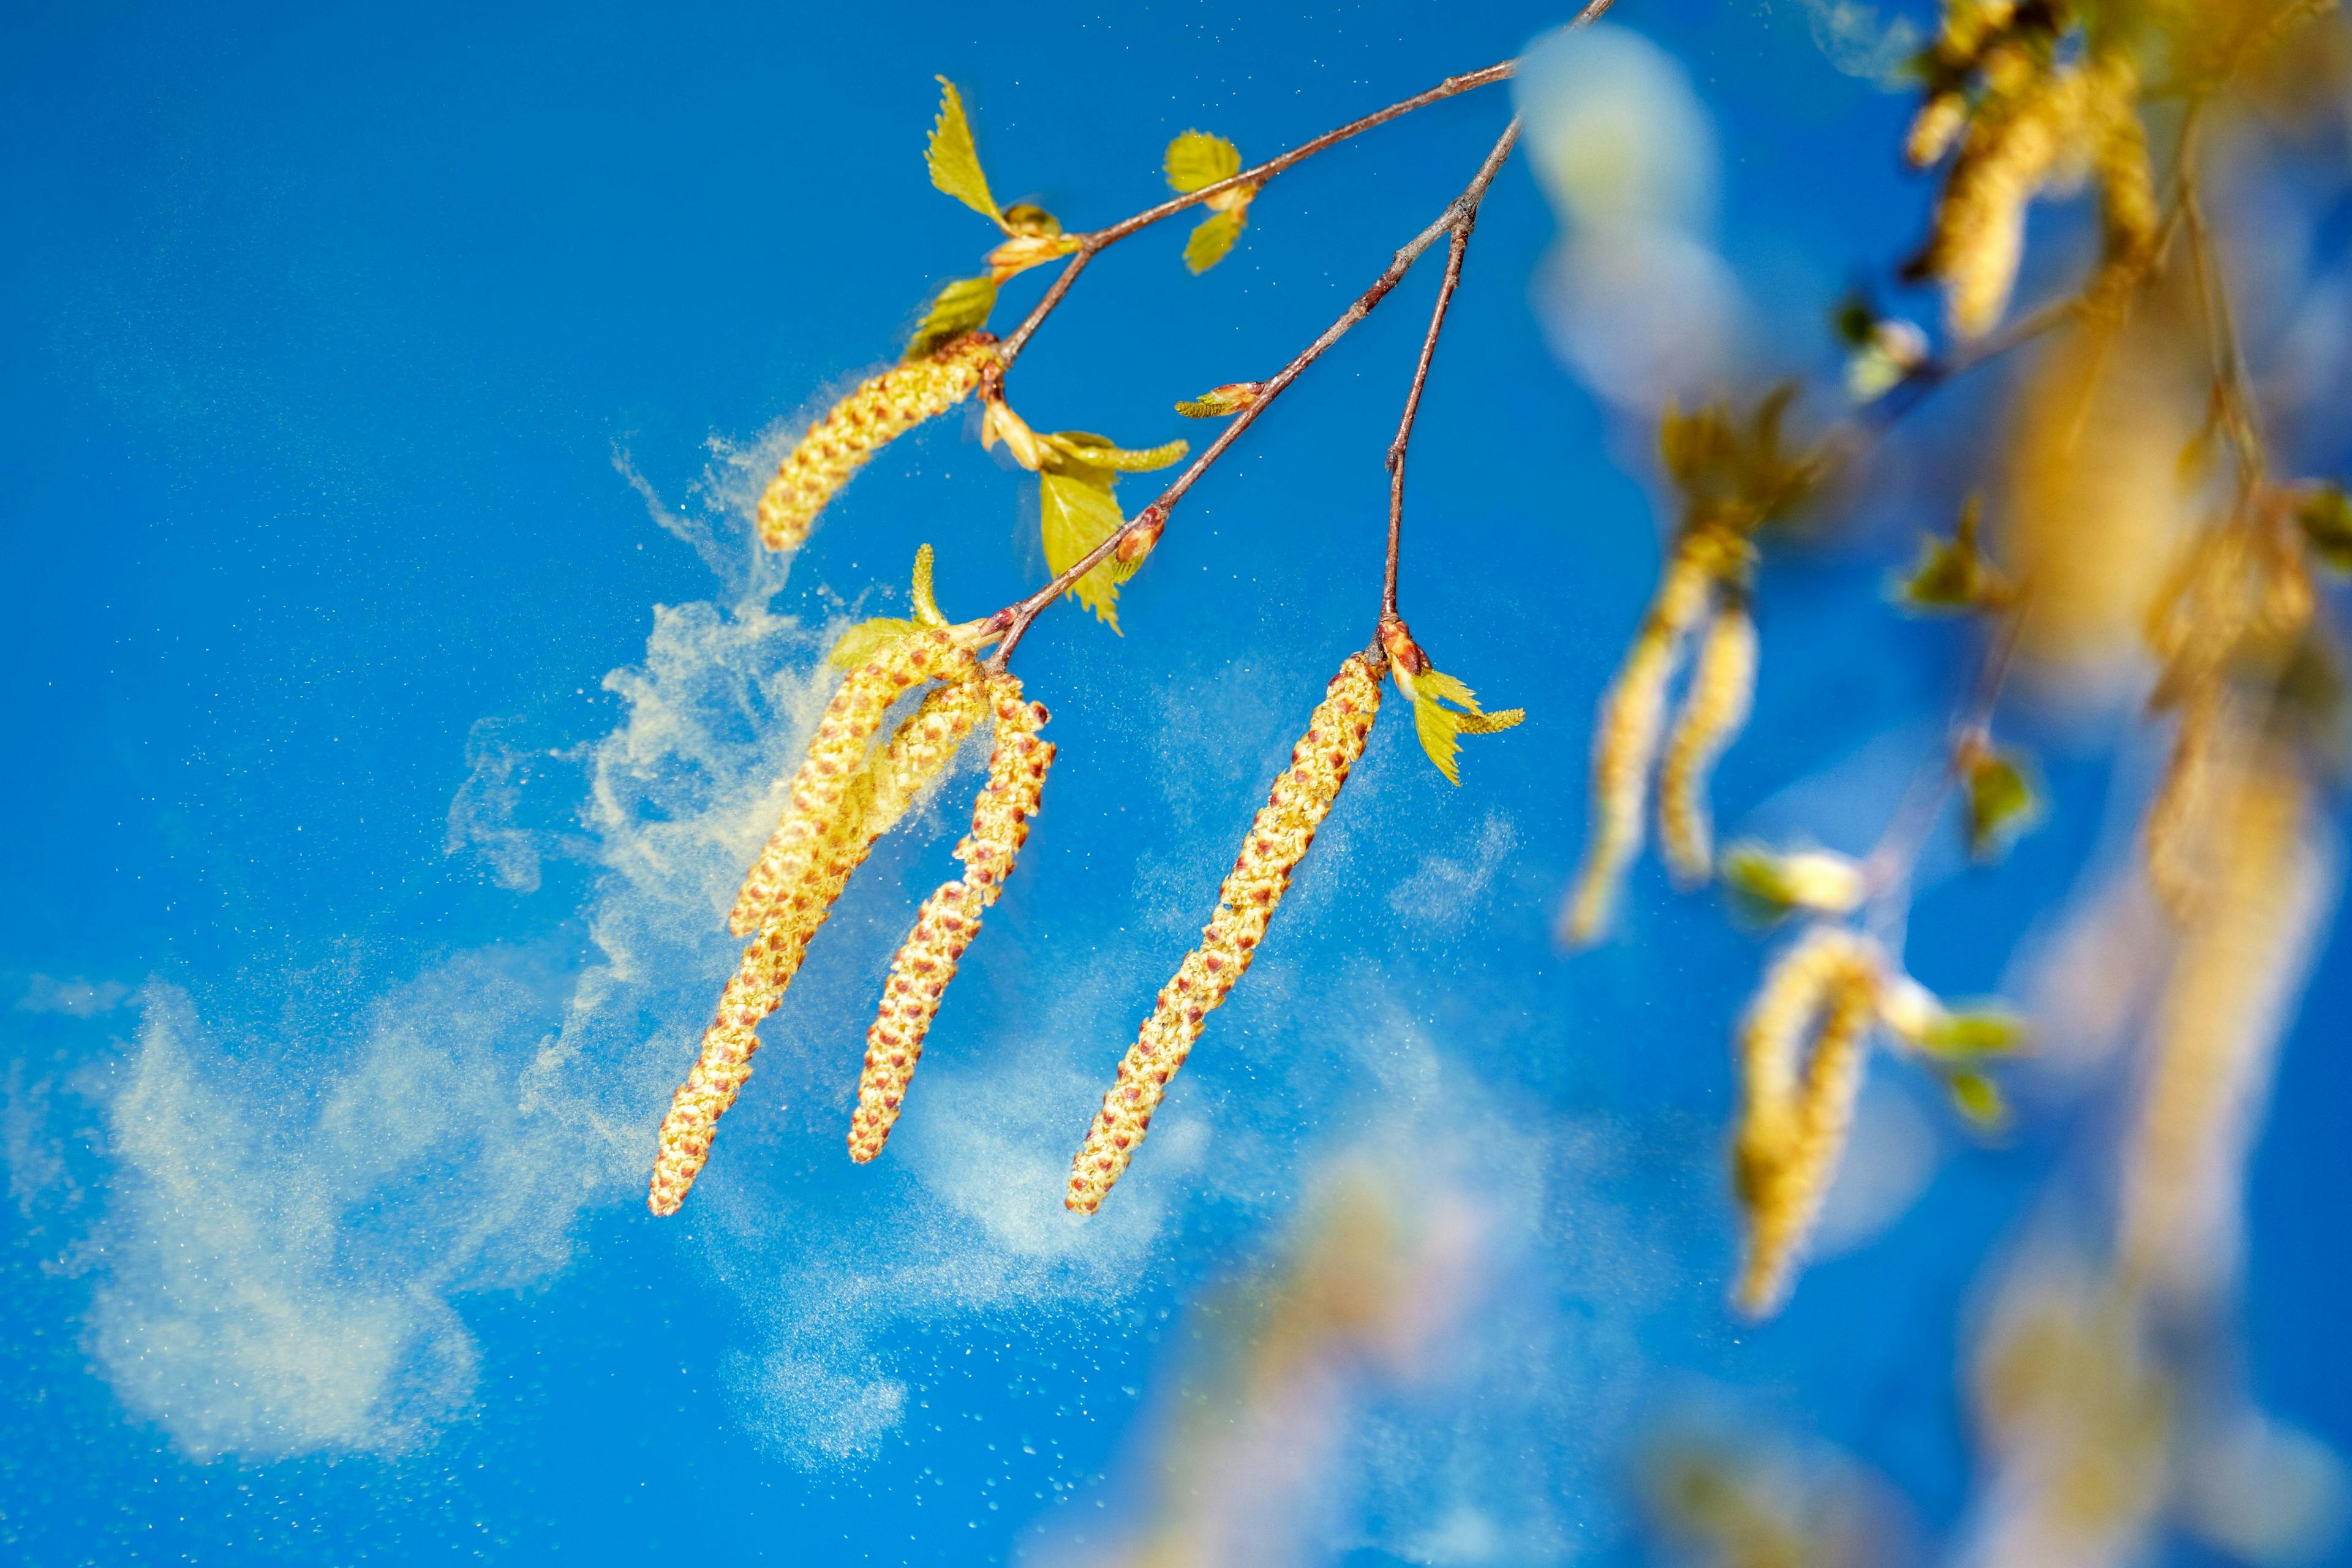 tree pollen allergy season | Image Credit: Ingo Bartussek - stock.adobe.com